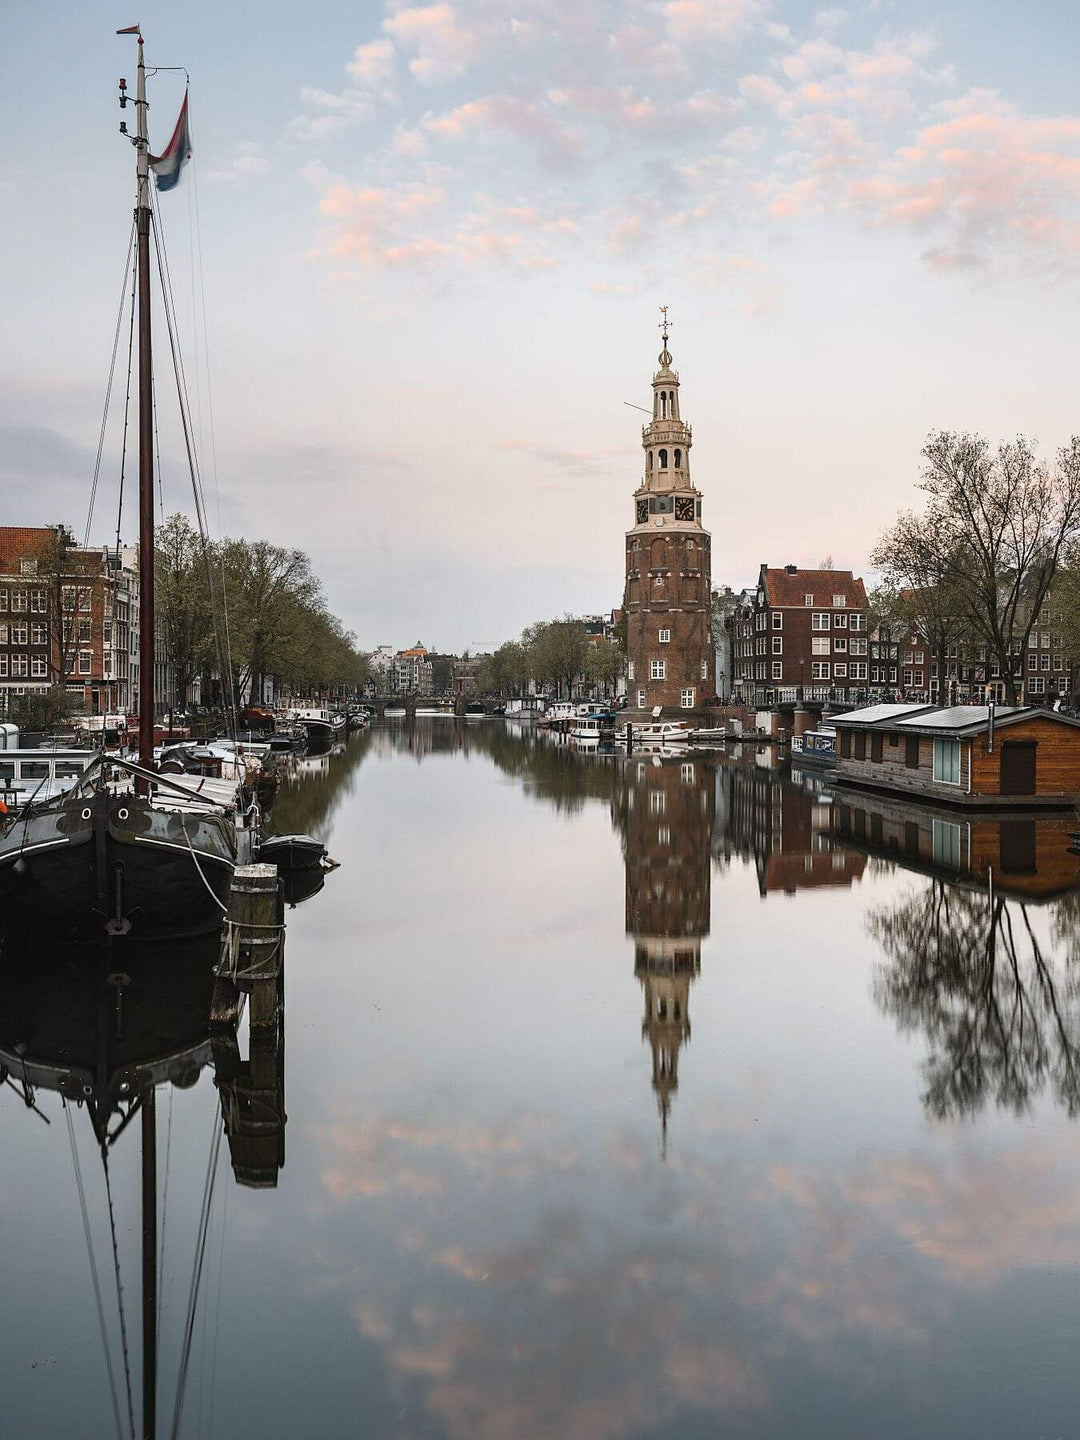 Torre Montelbaans, canal y casas antiguas en Amsterdam l Lámina